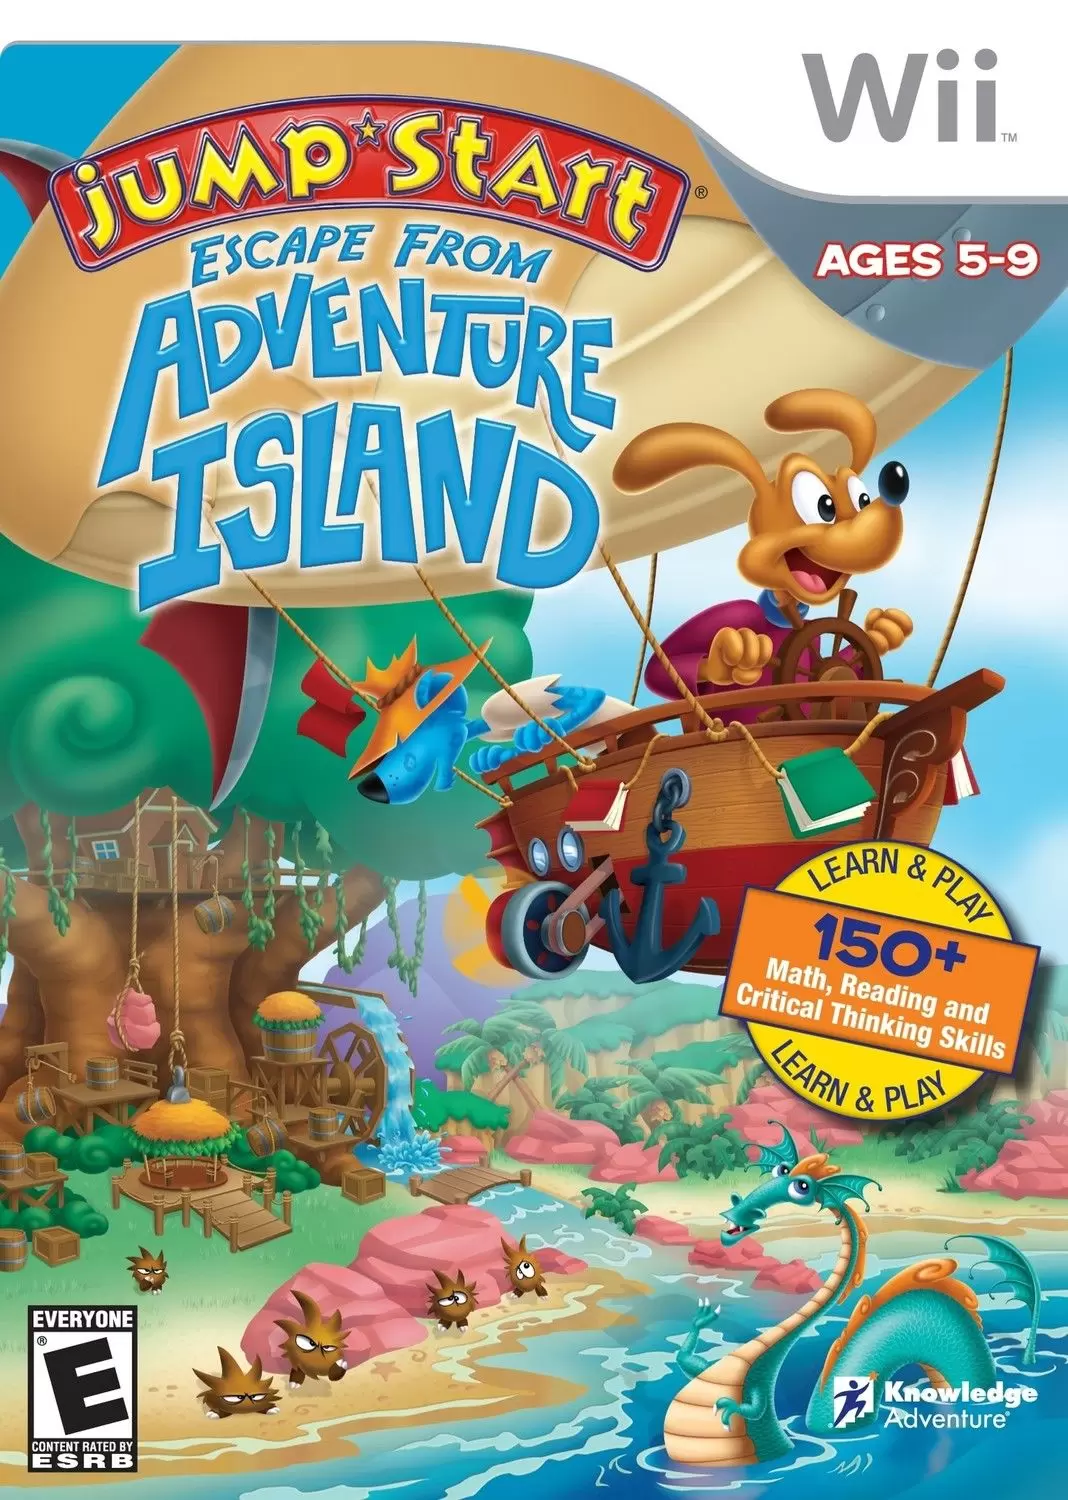 Nintendo Wii Games - JumpStart Escape from Adventure Island